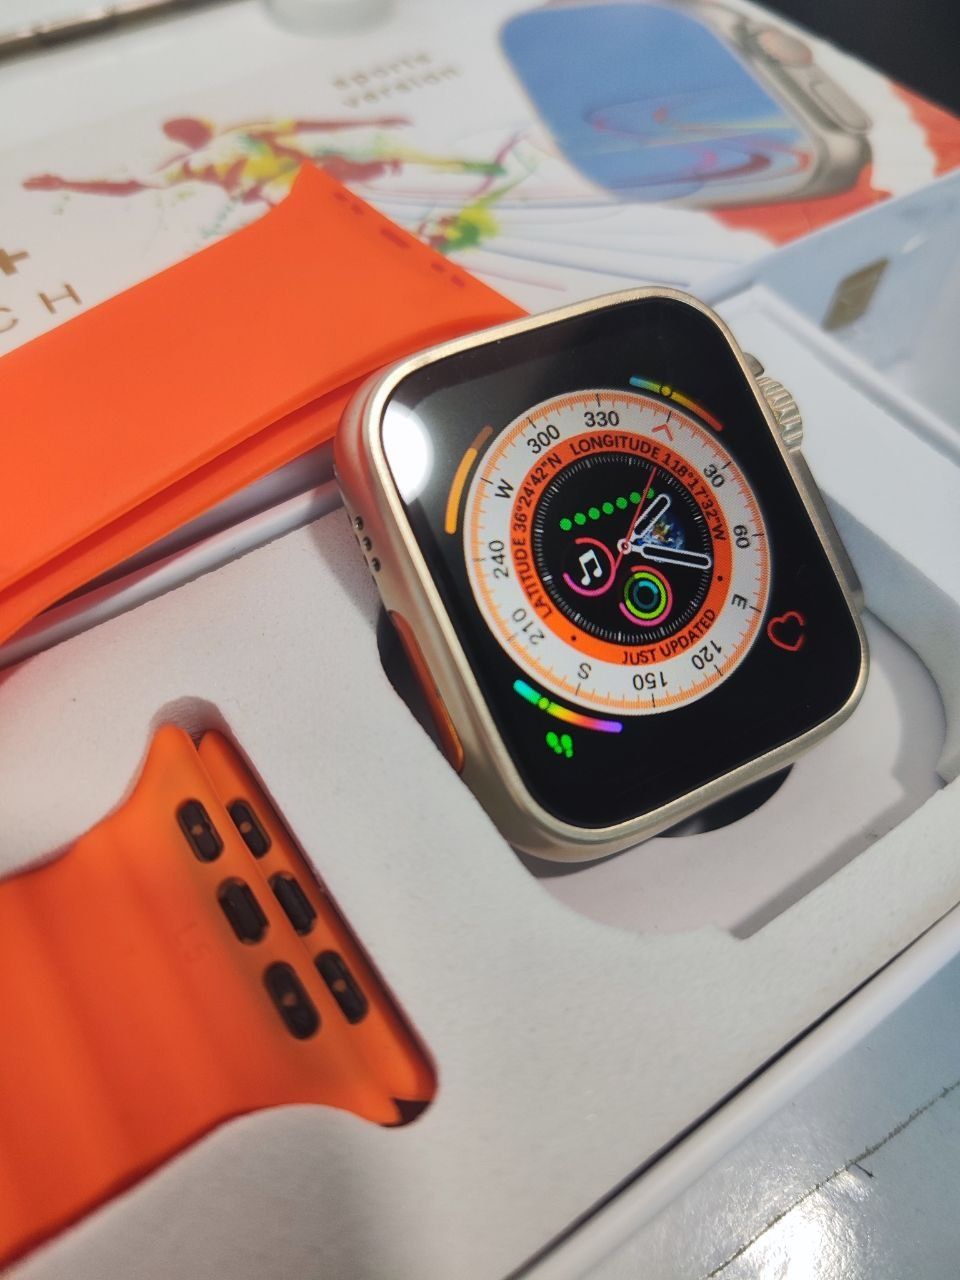 X8 ultra  smart watch

5$